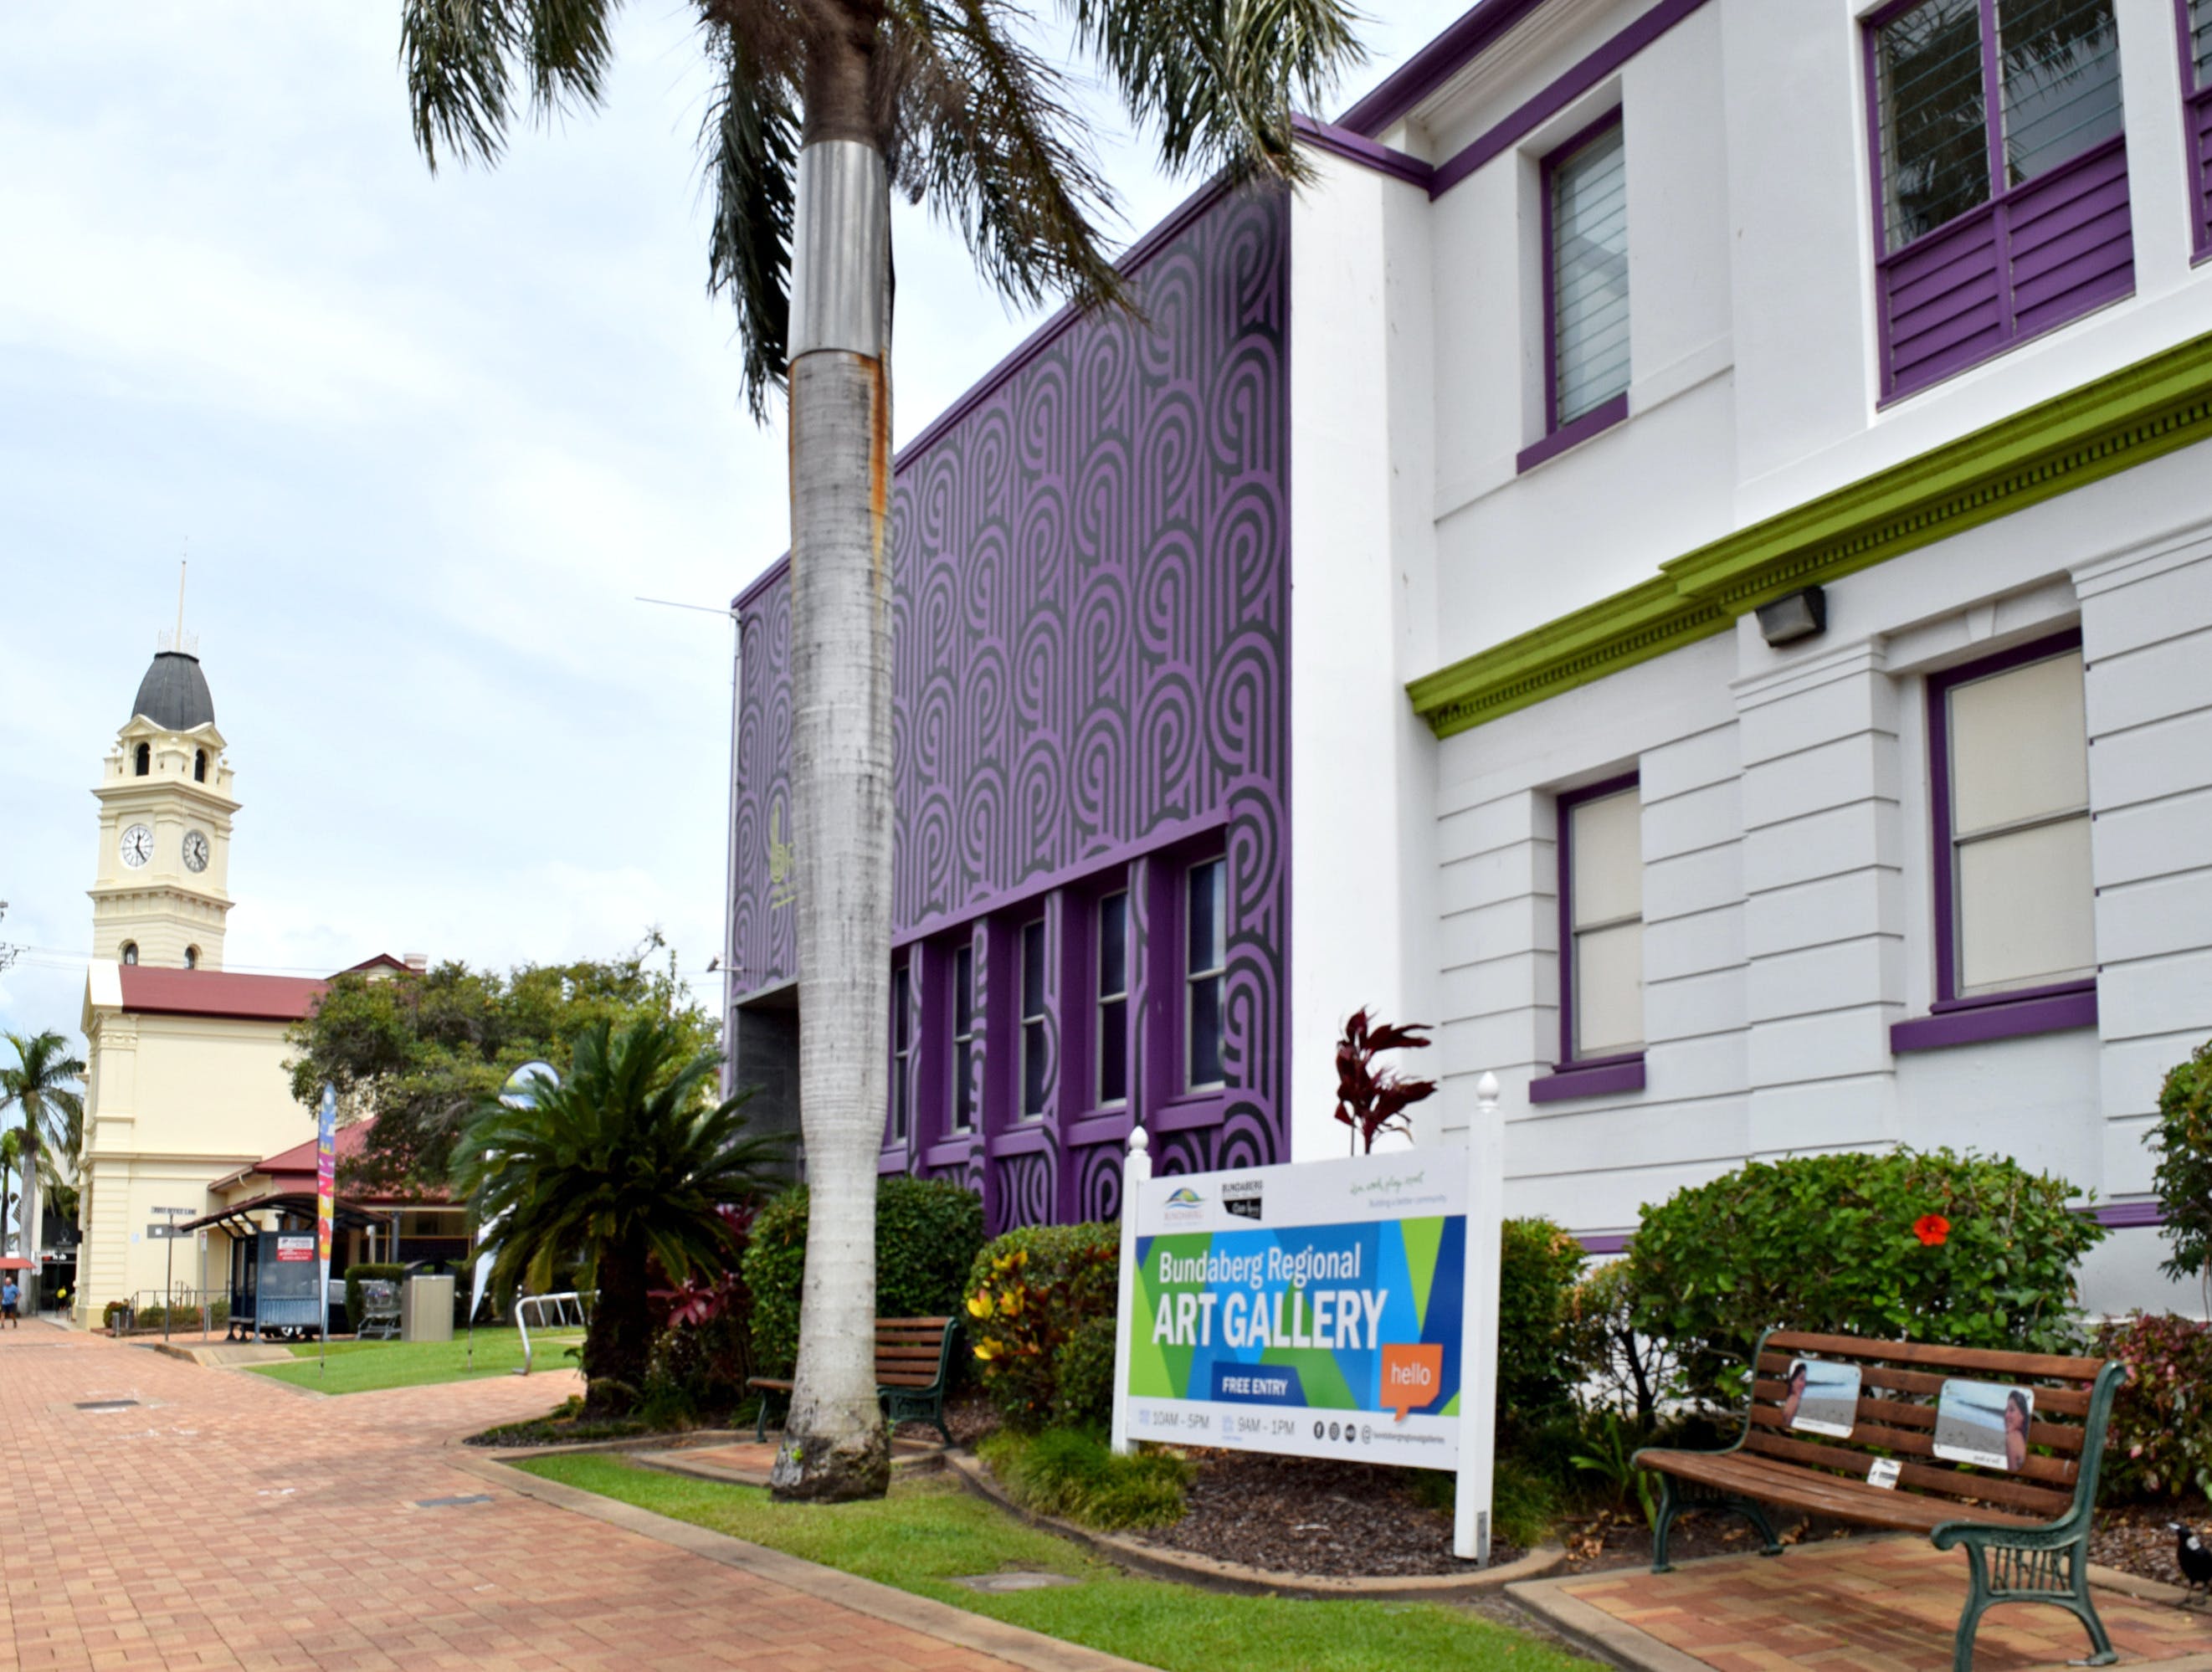 Bundaberg Regional Art Gallery - Palm Beach Accommodation